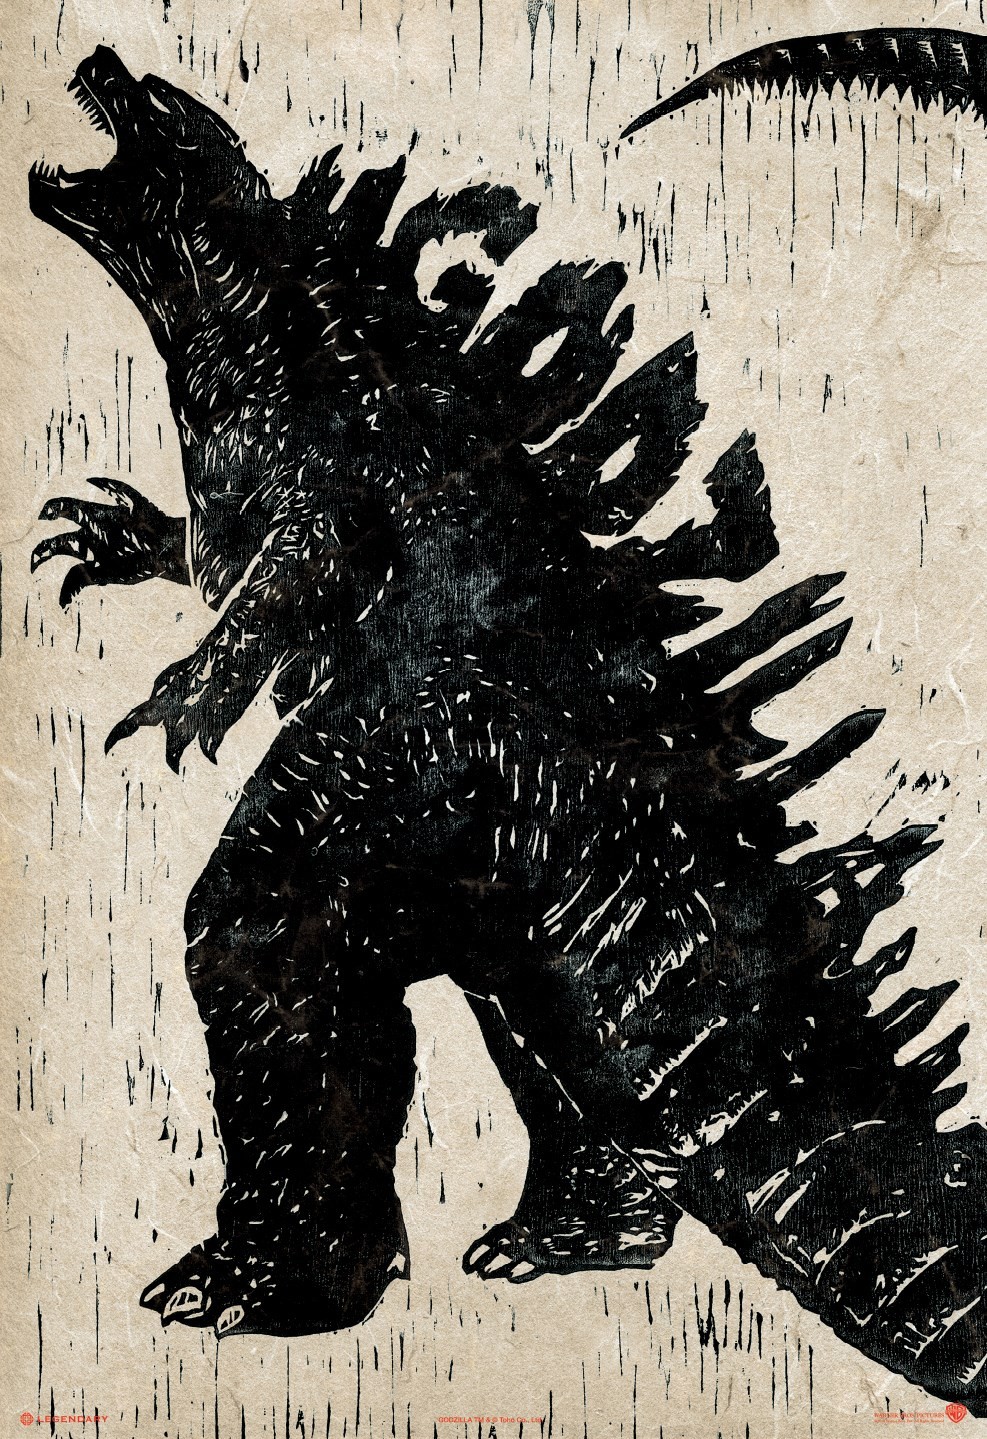 Extra Large Movie Poster Image for Godzilla (#16 of 22)